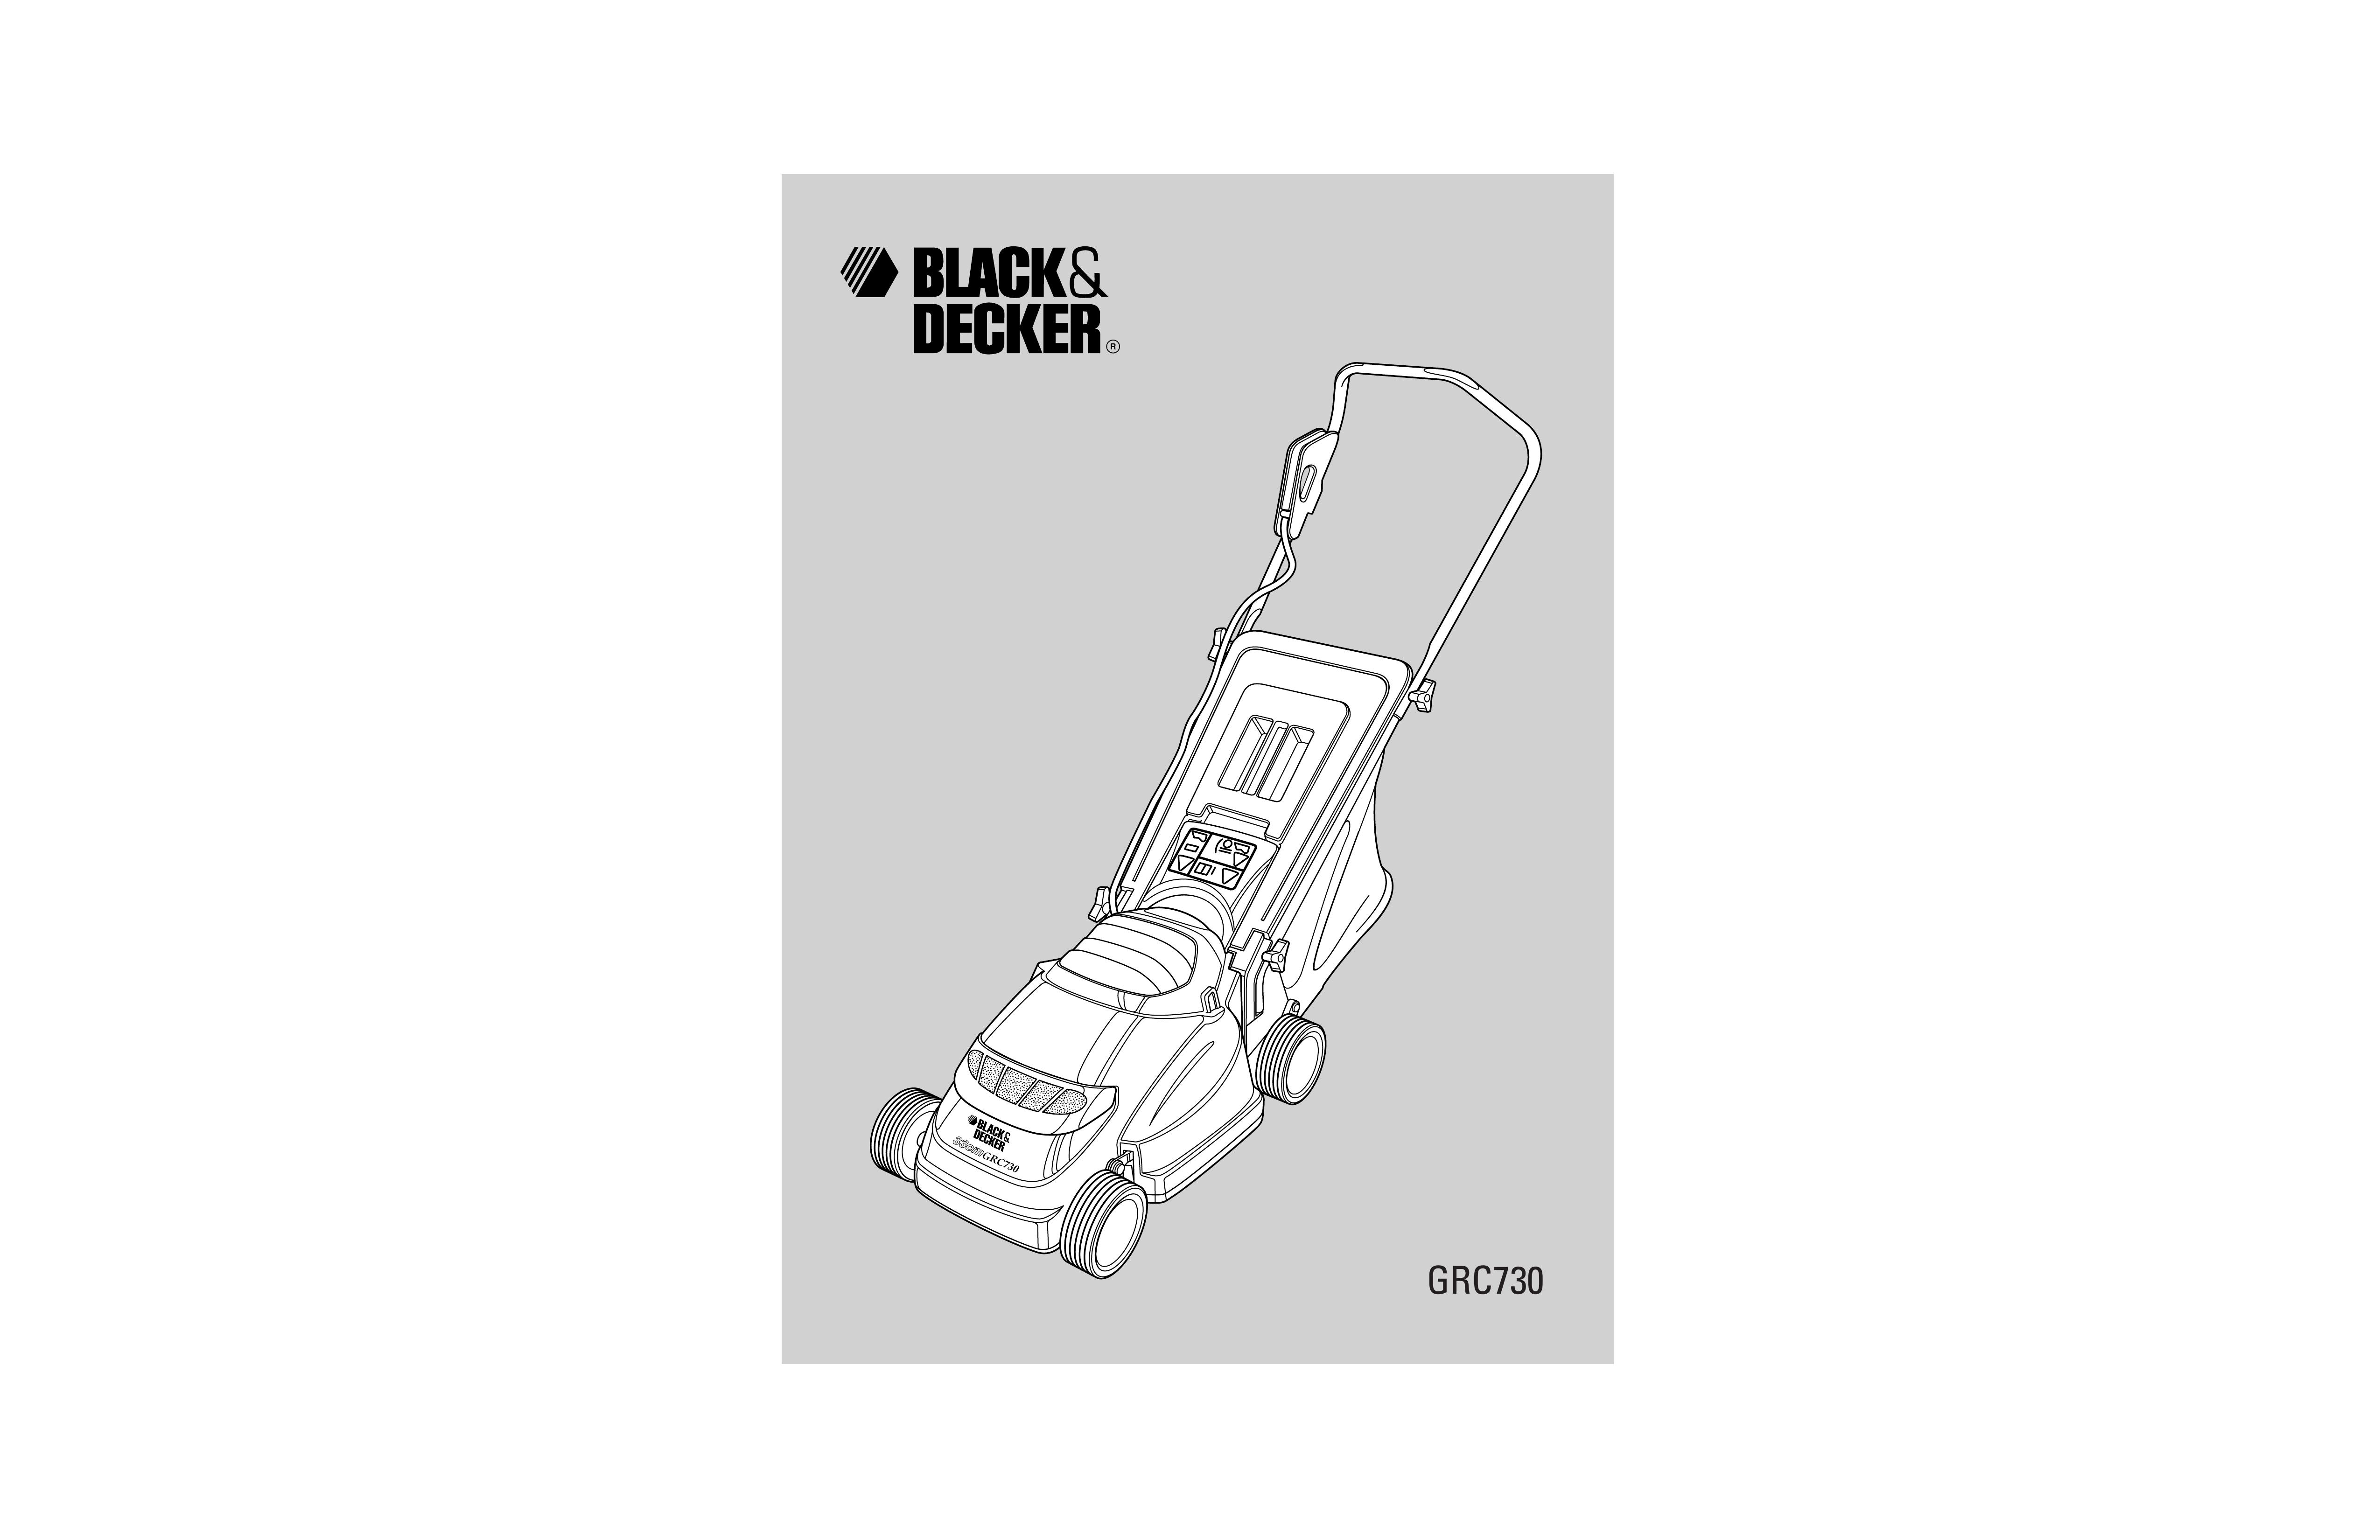 Black & Decker GRC730 Lawn Mower User Manual